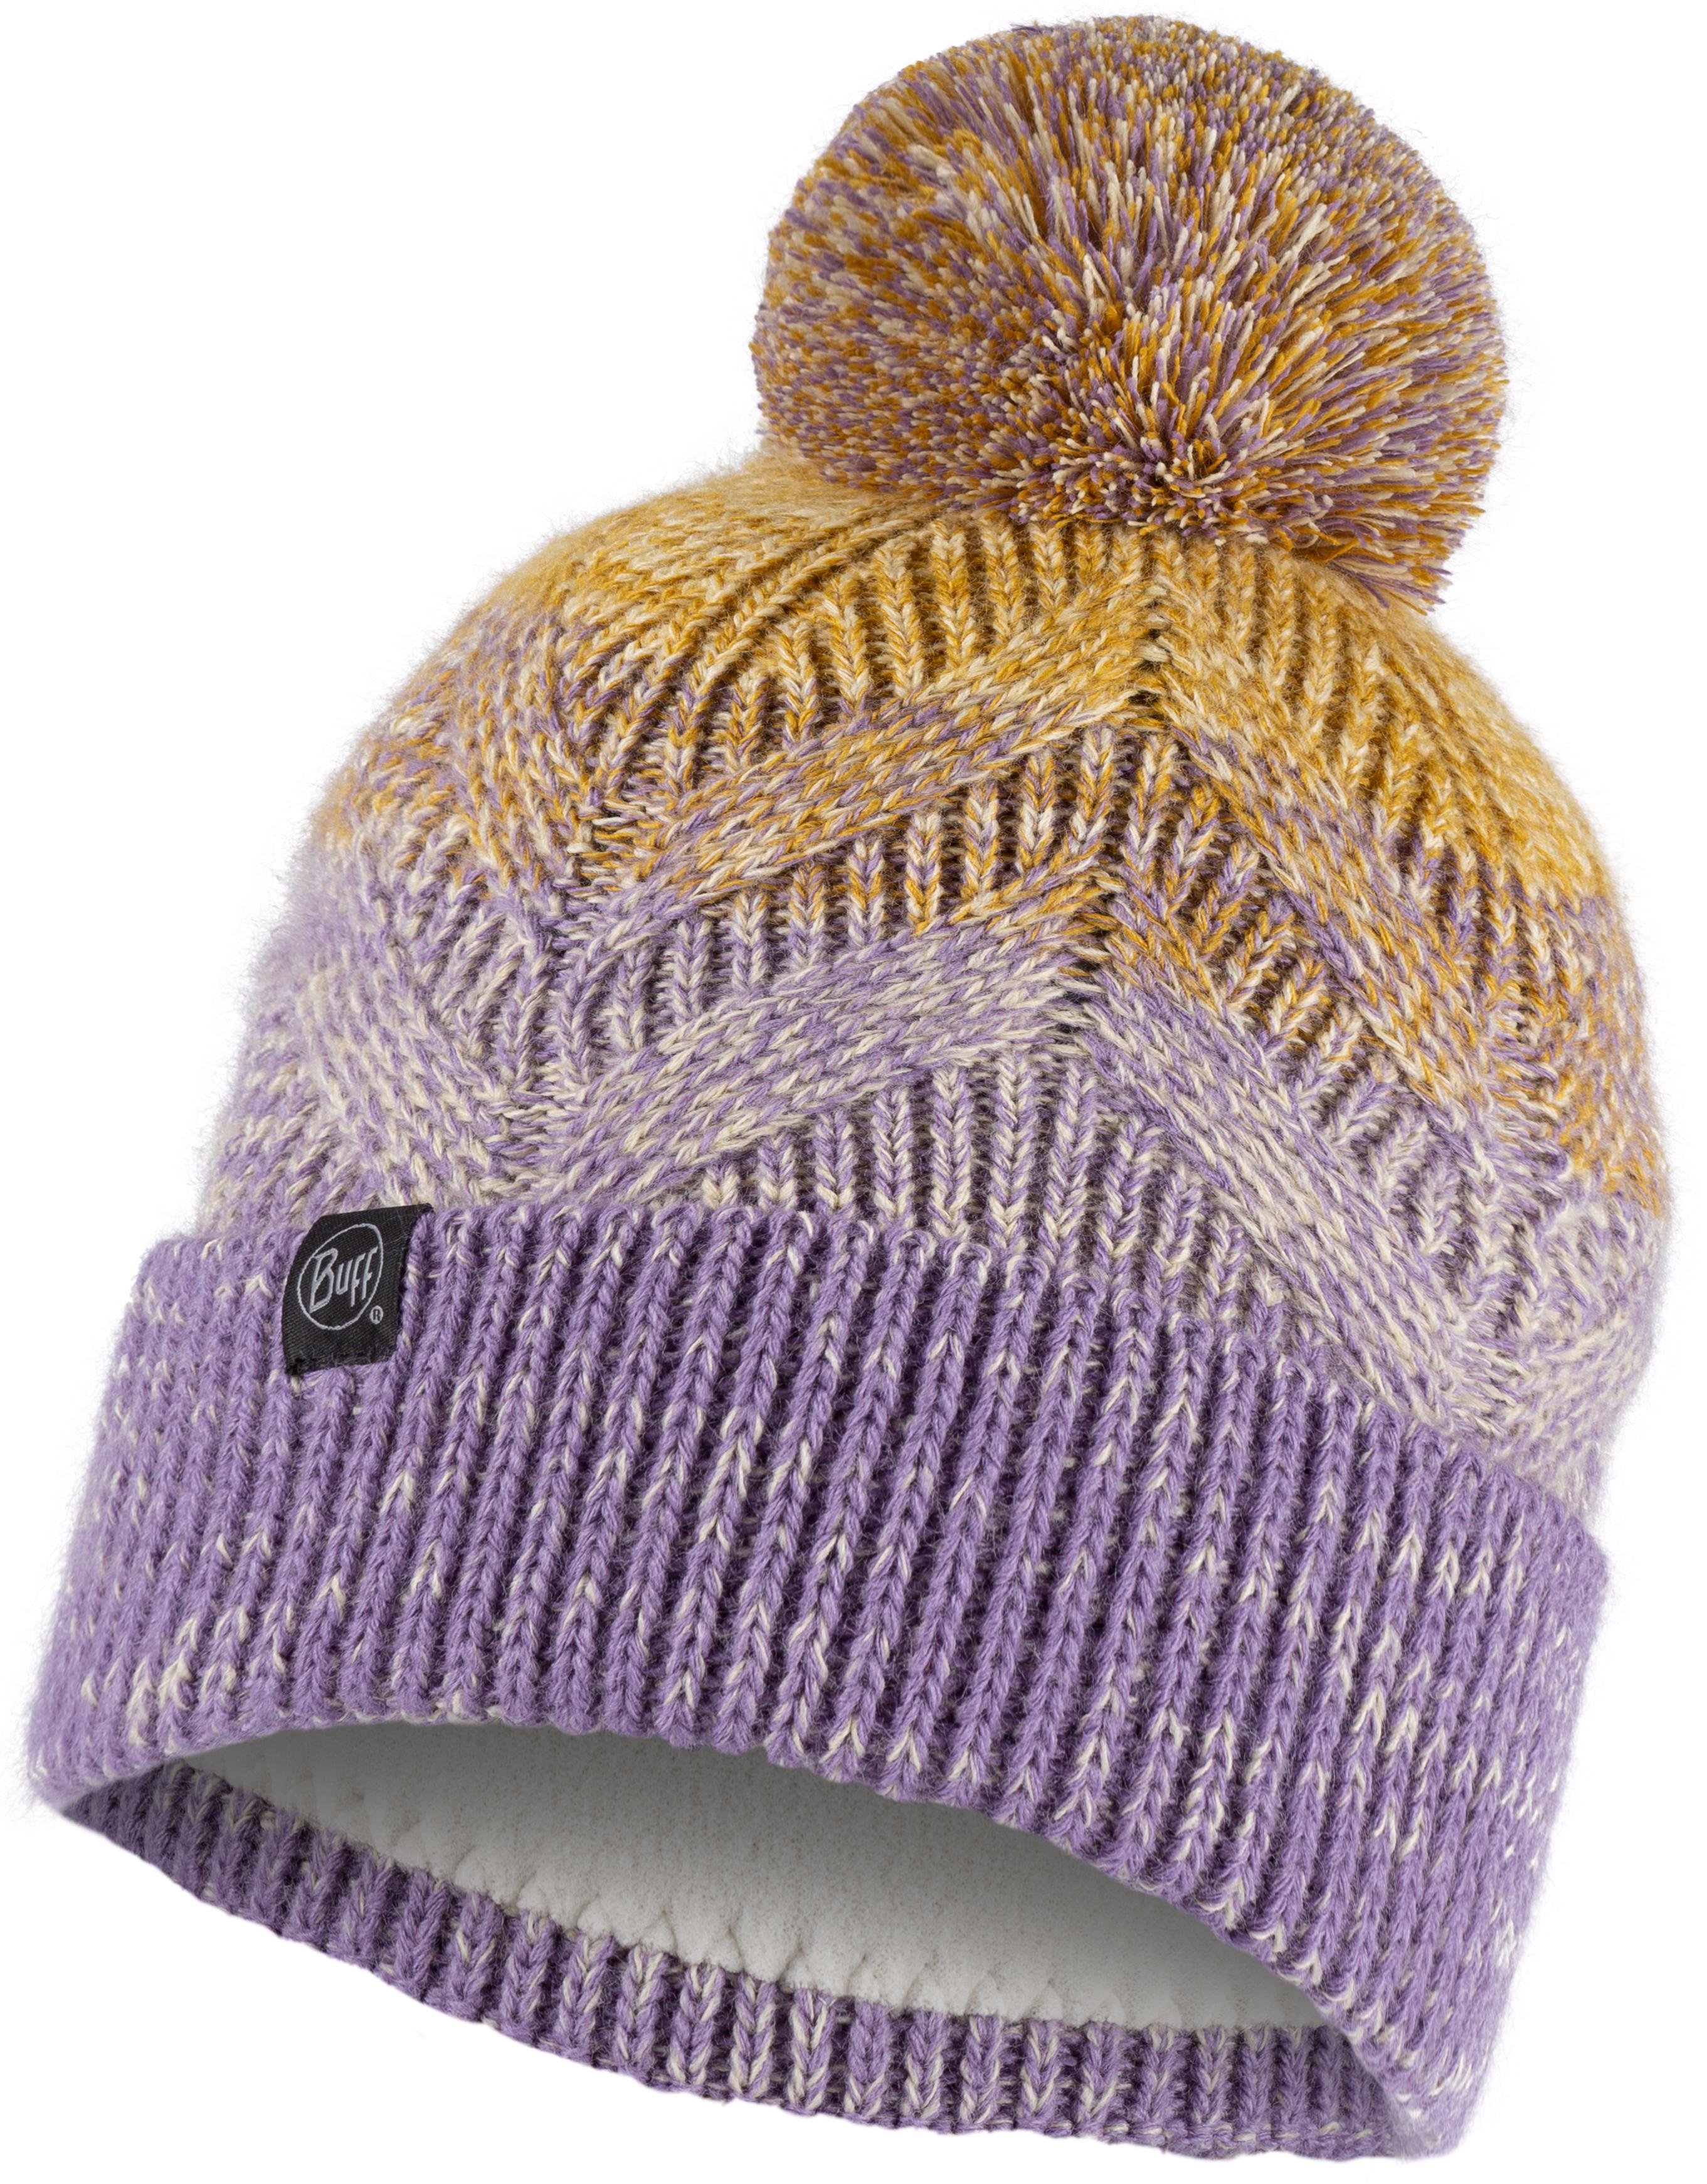 Шапка бини унисекс Buff Knitted & Fleece Band Hat Masha бежевая, фиолетовая, one size